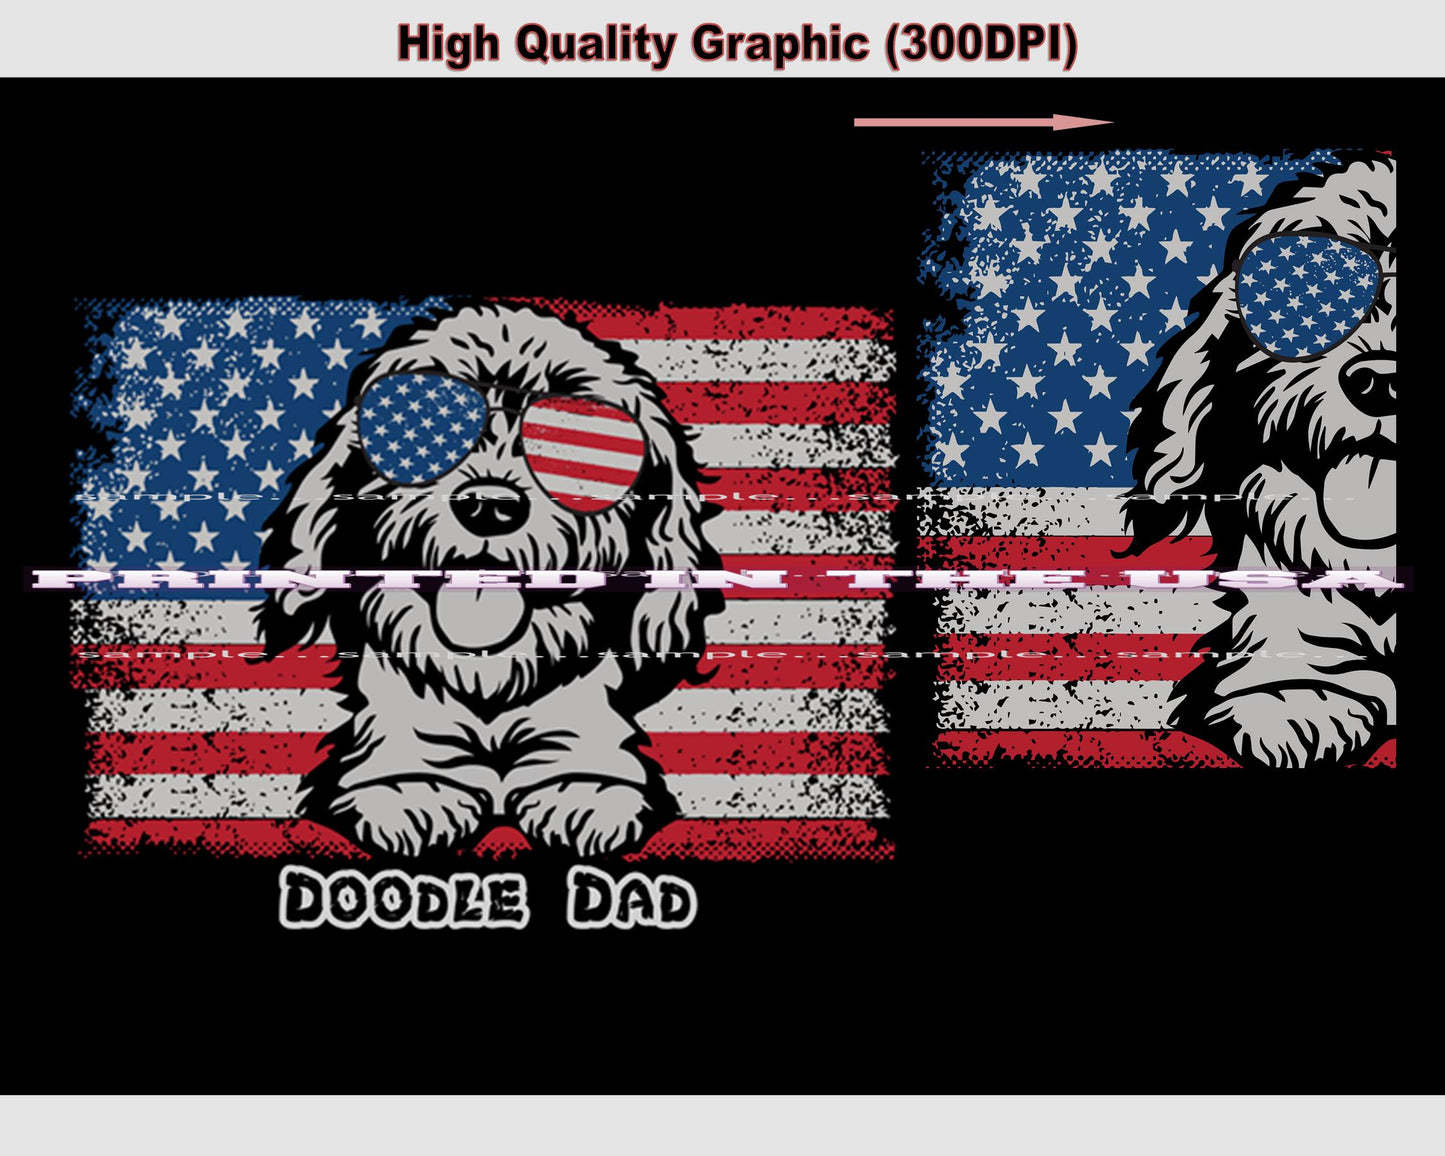 Goldendoodle Labradoodle Dog Breed All American Proud Doodle Dad Short/Long Sleeve Black T Shirt